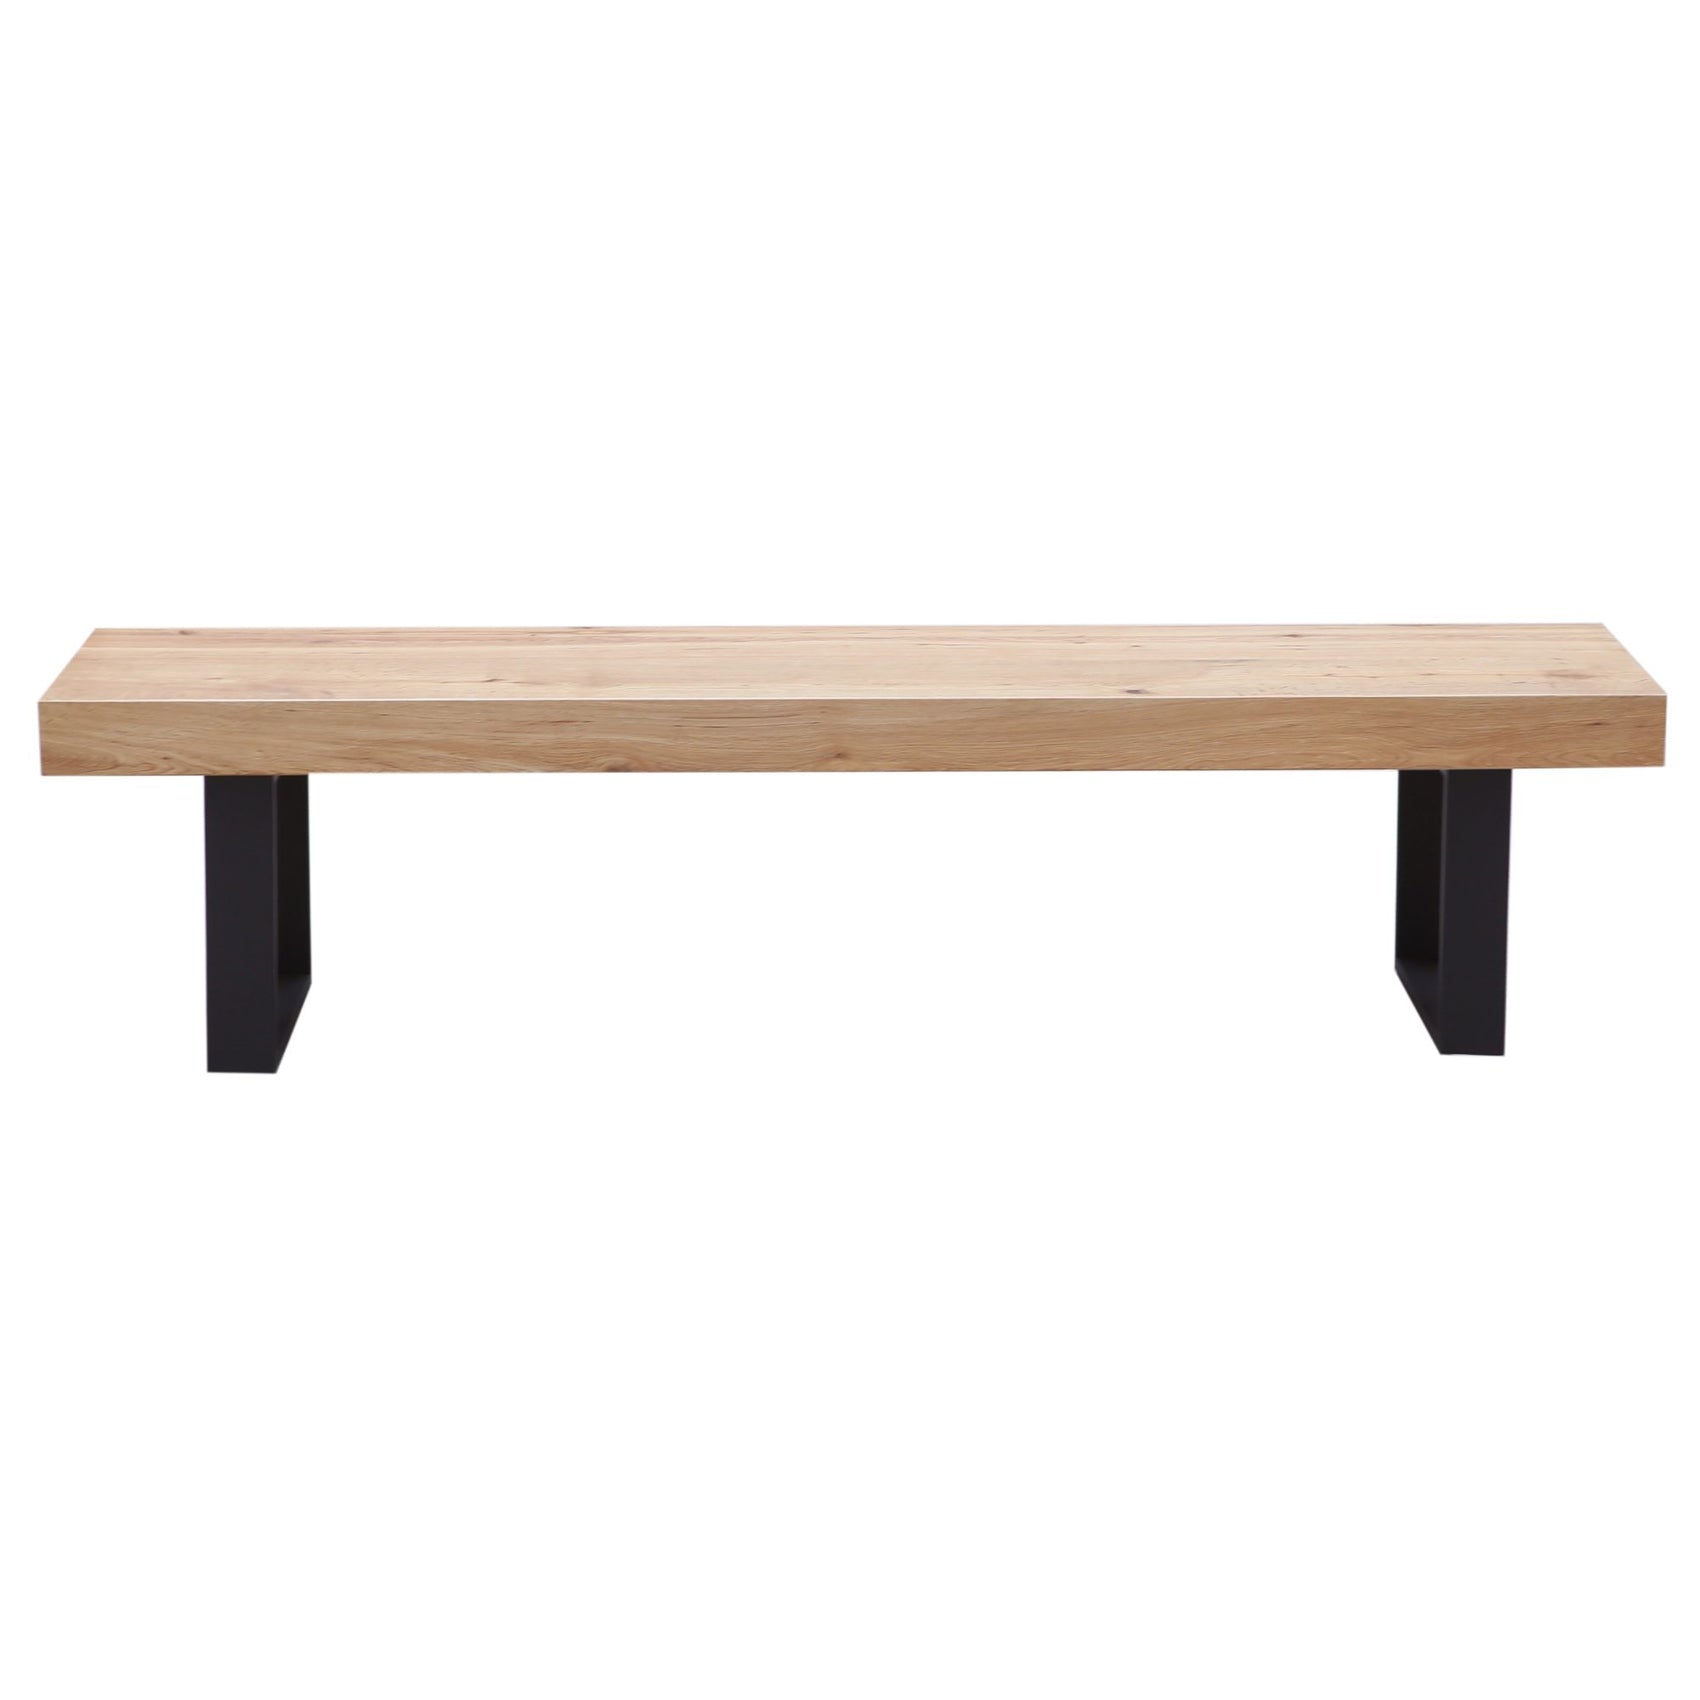 Ethan 190cm Dining Table Bench Seat Veneer Solid Oak Top Metal Leg - Natural